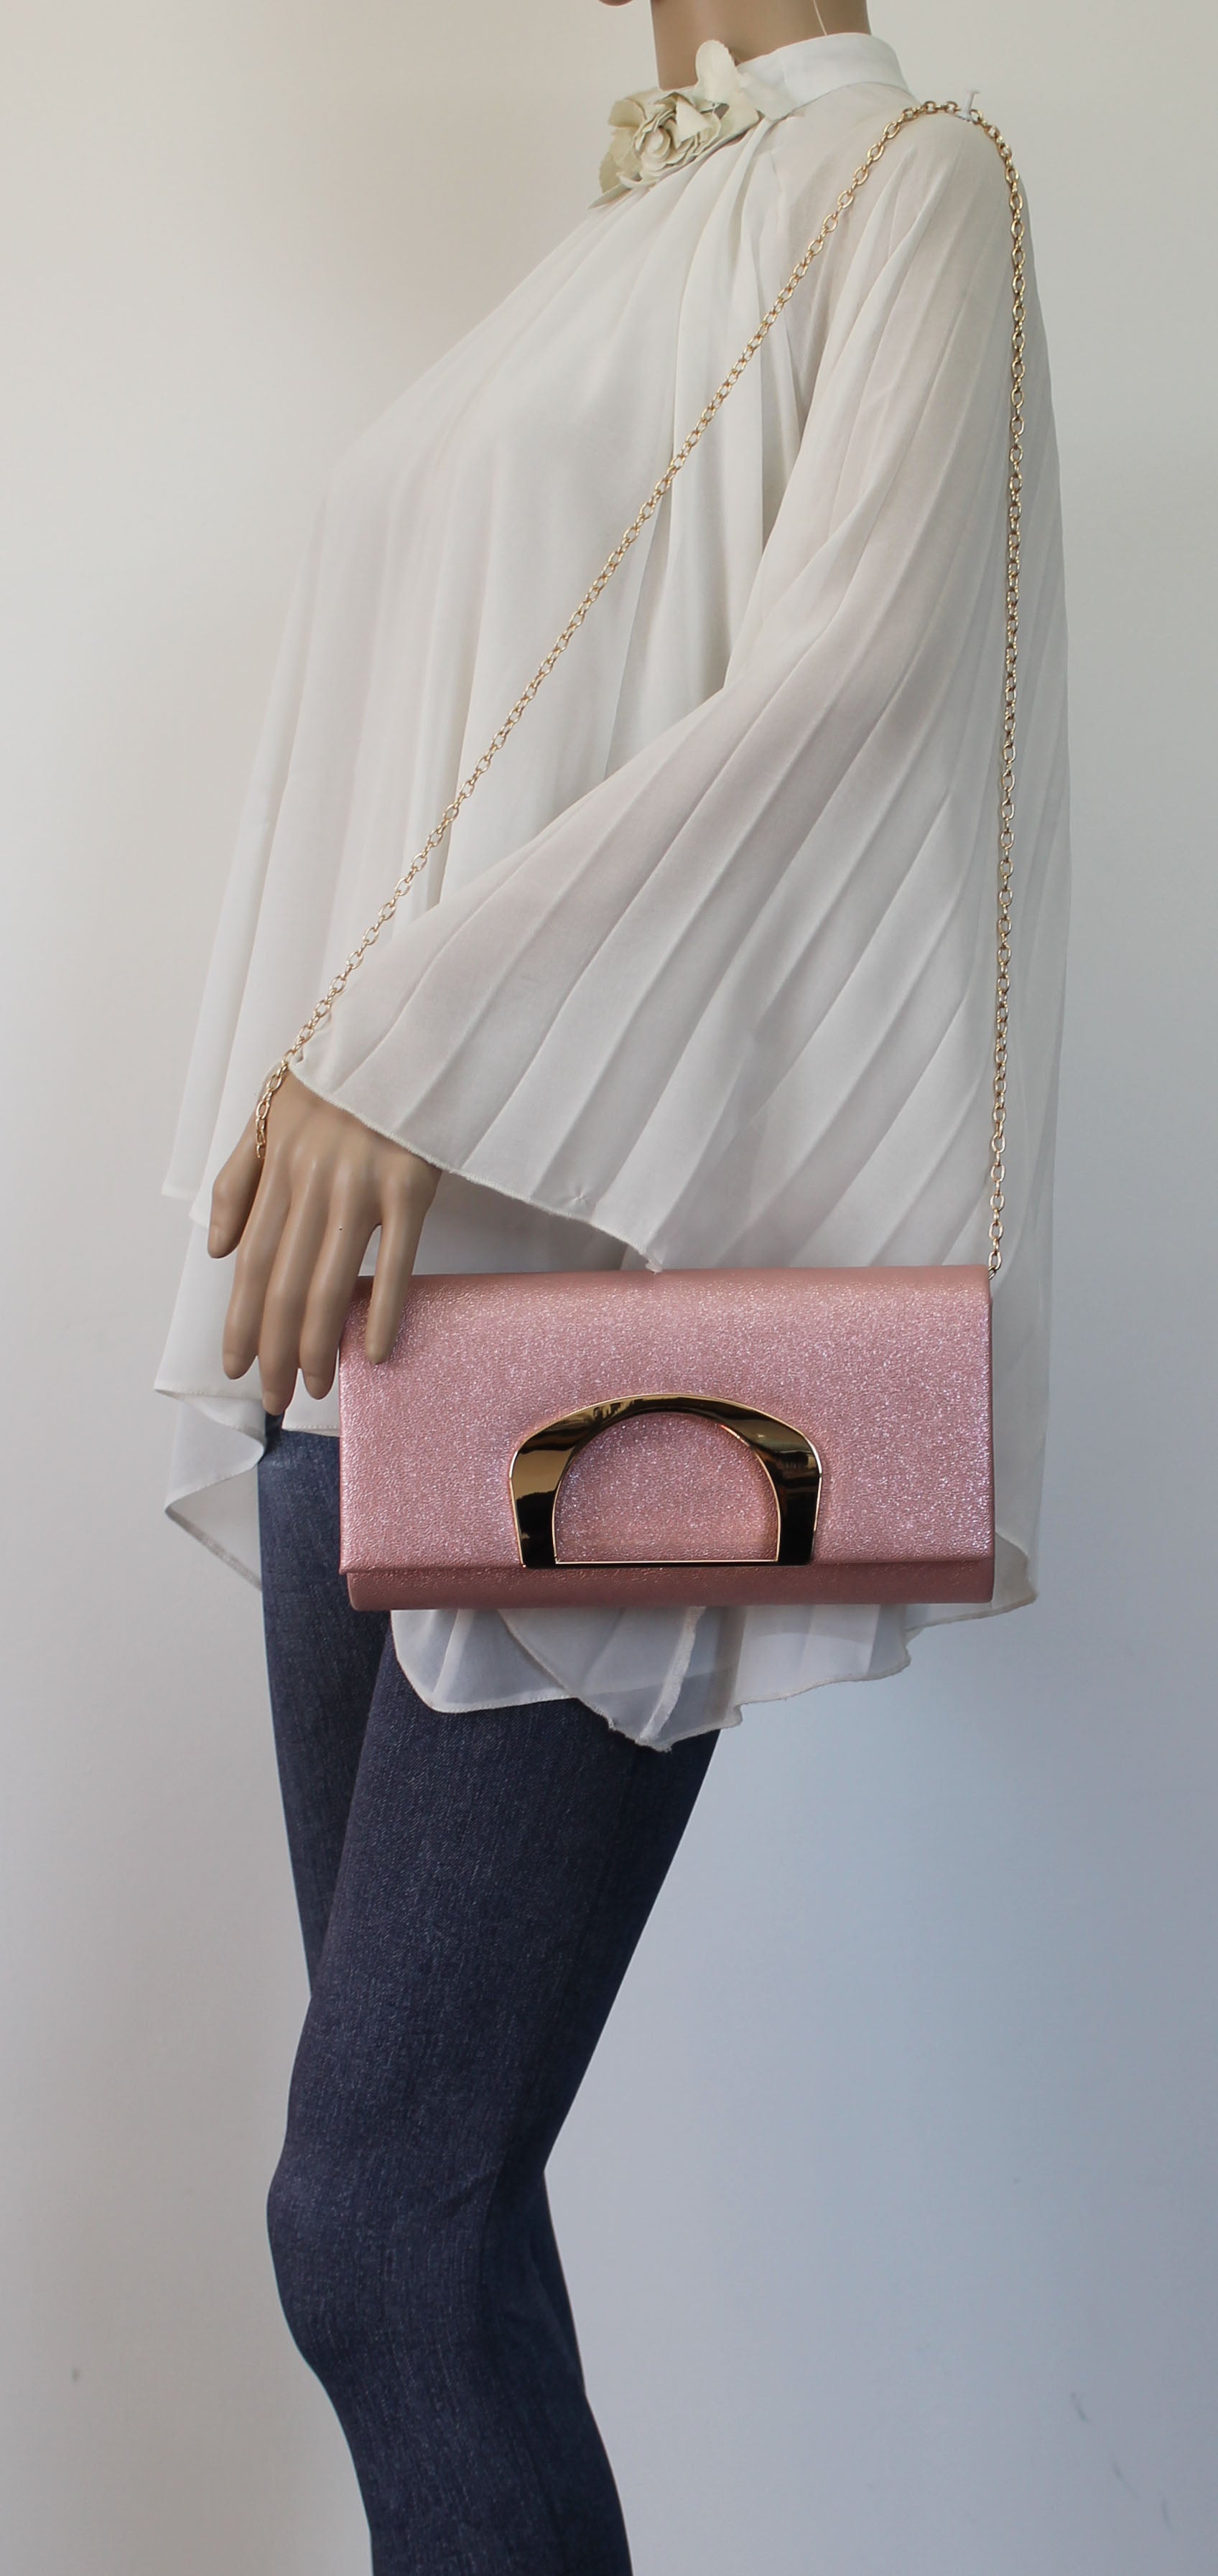 SWANKYSWANS Marcie Clutch Bag Pink Cute Cheap Clutch Bag For Weddings School and Work